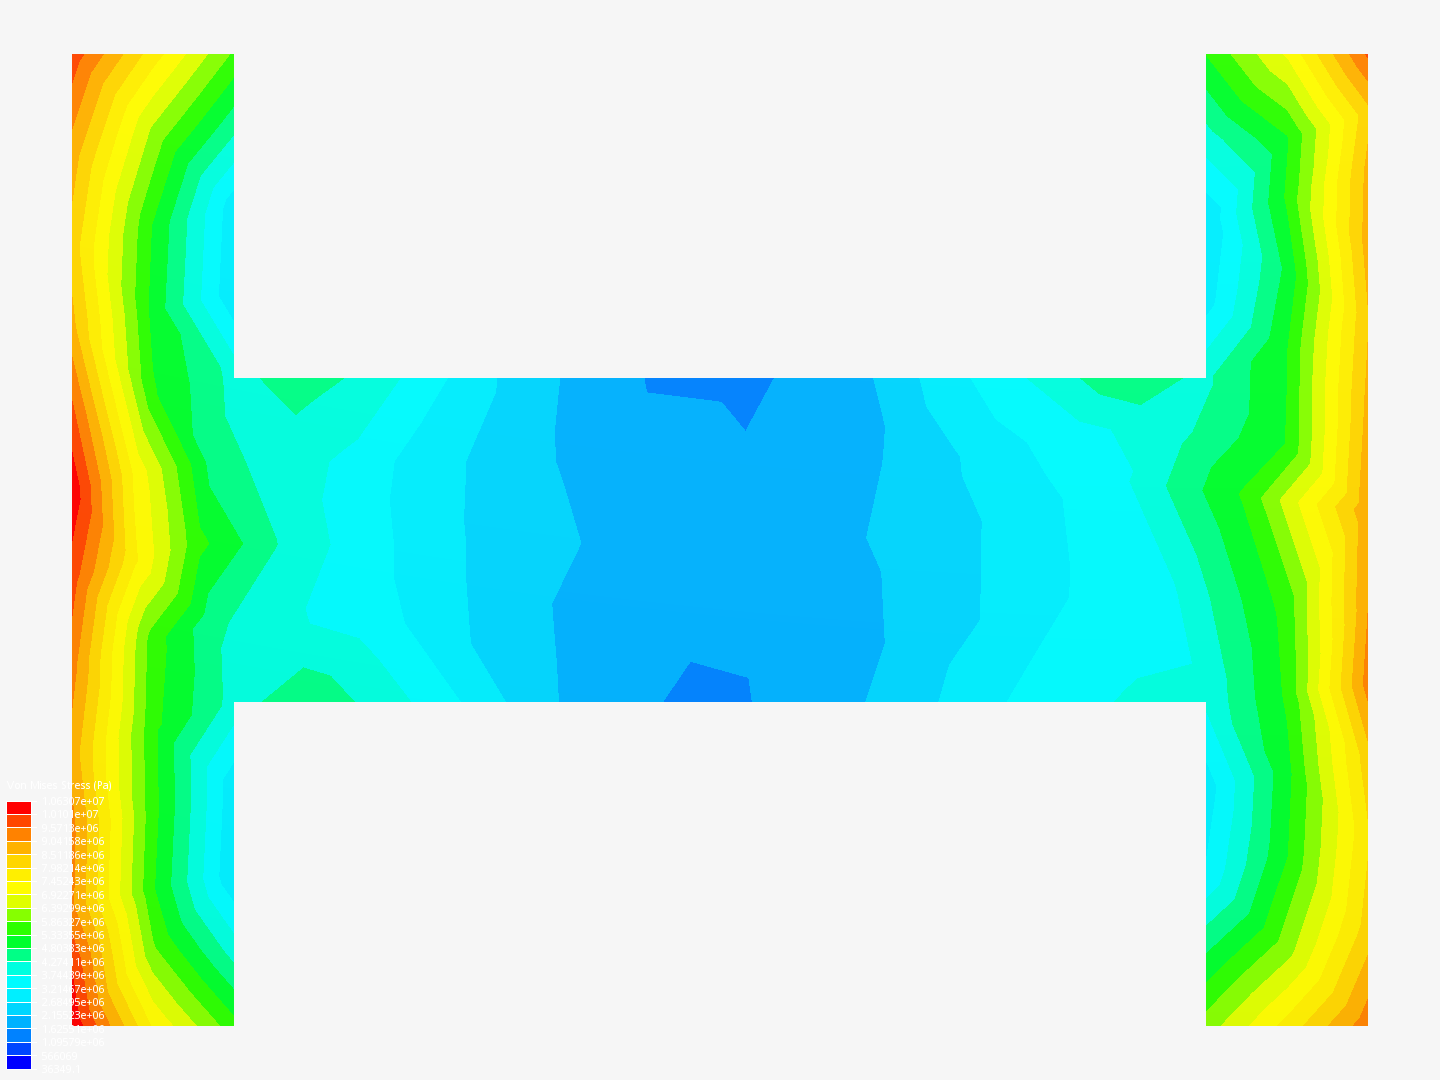 Static Analysis of an I Beam image